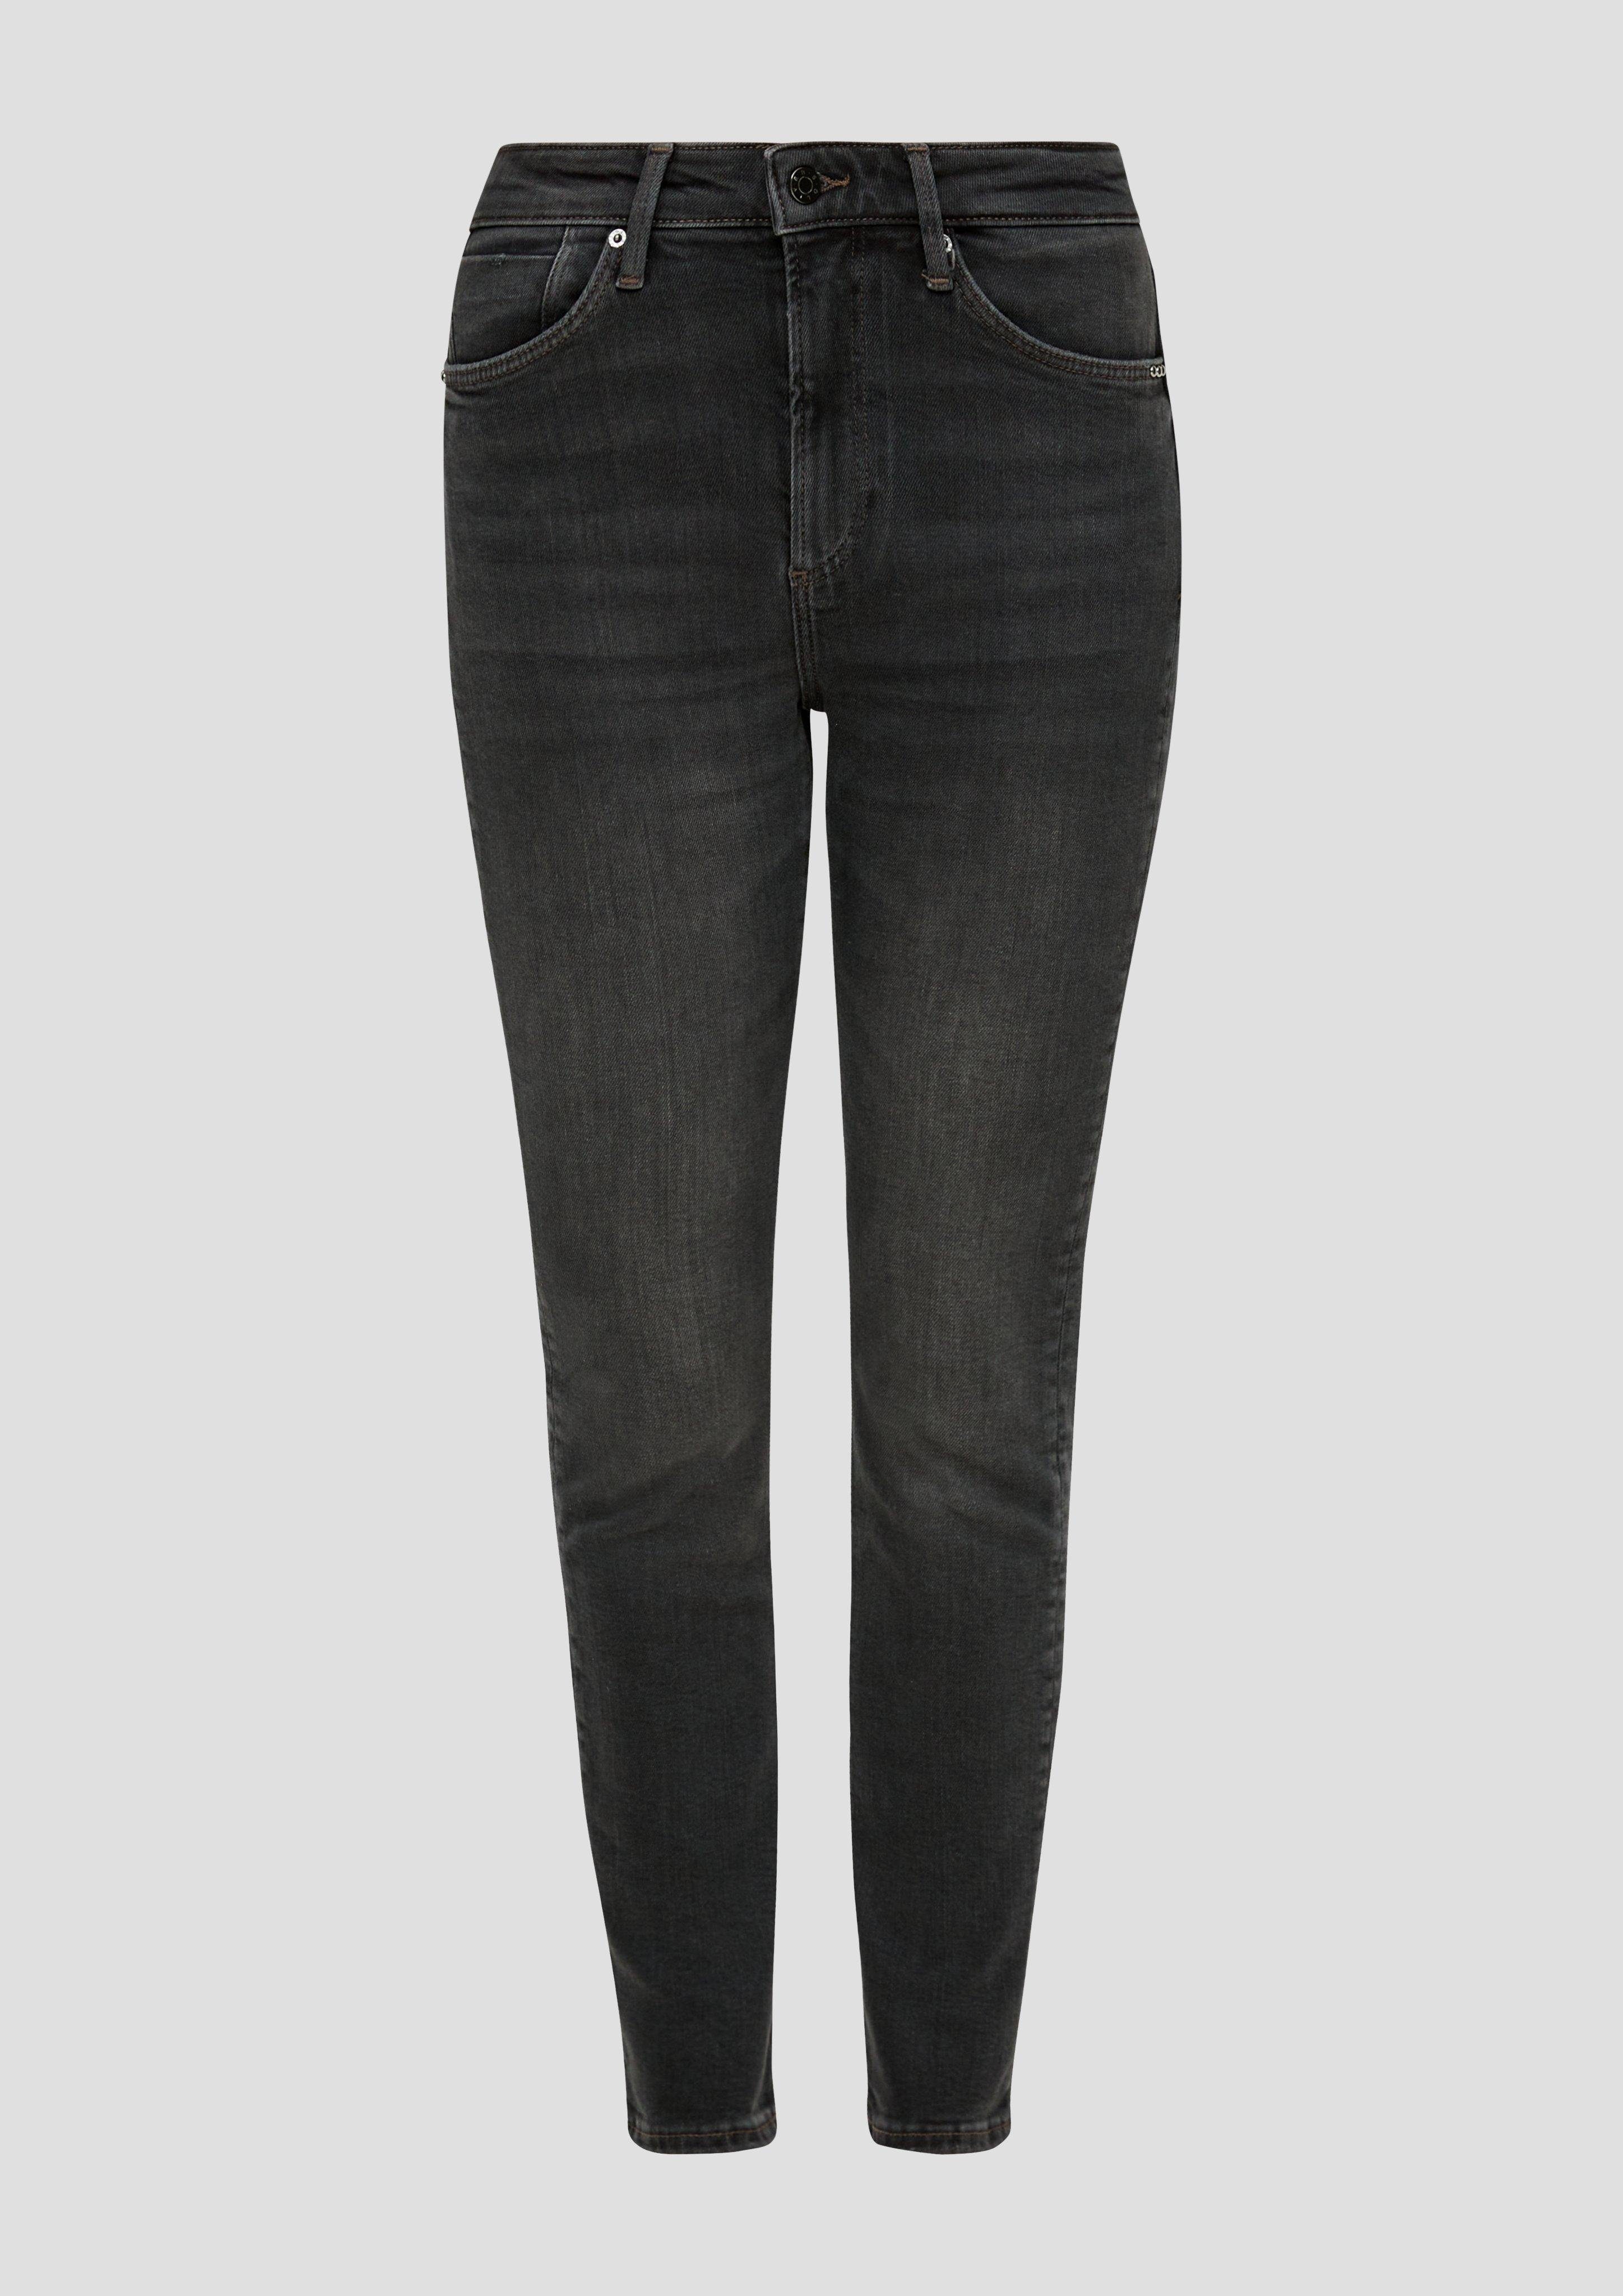 Skinny / 7/8-Jeans Nieten, Waschung Izabell Leder-Patch, Jeans / Skinny Fit Rise High s.Oliver graphit Leg /